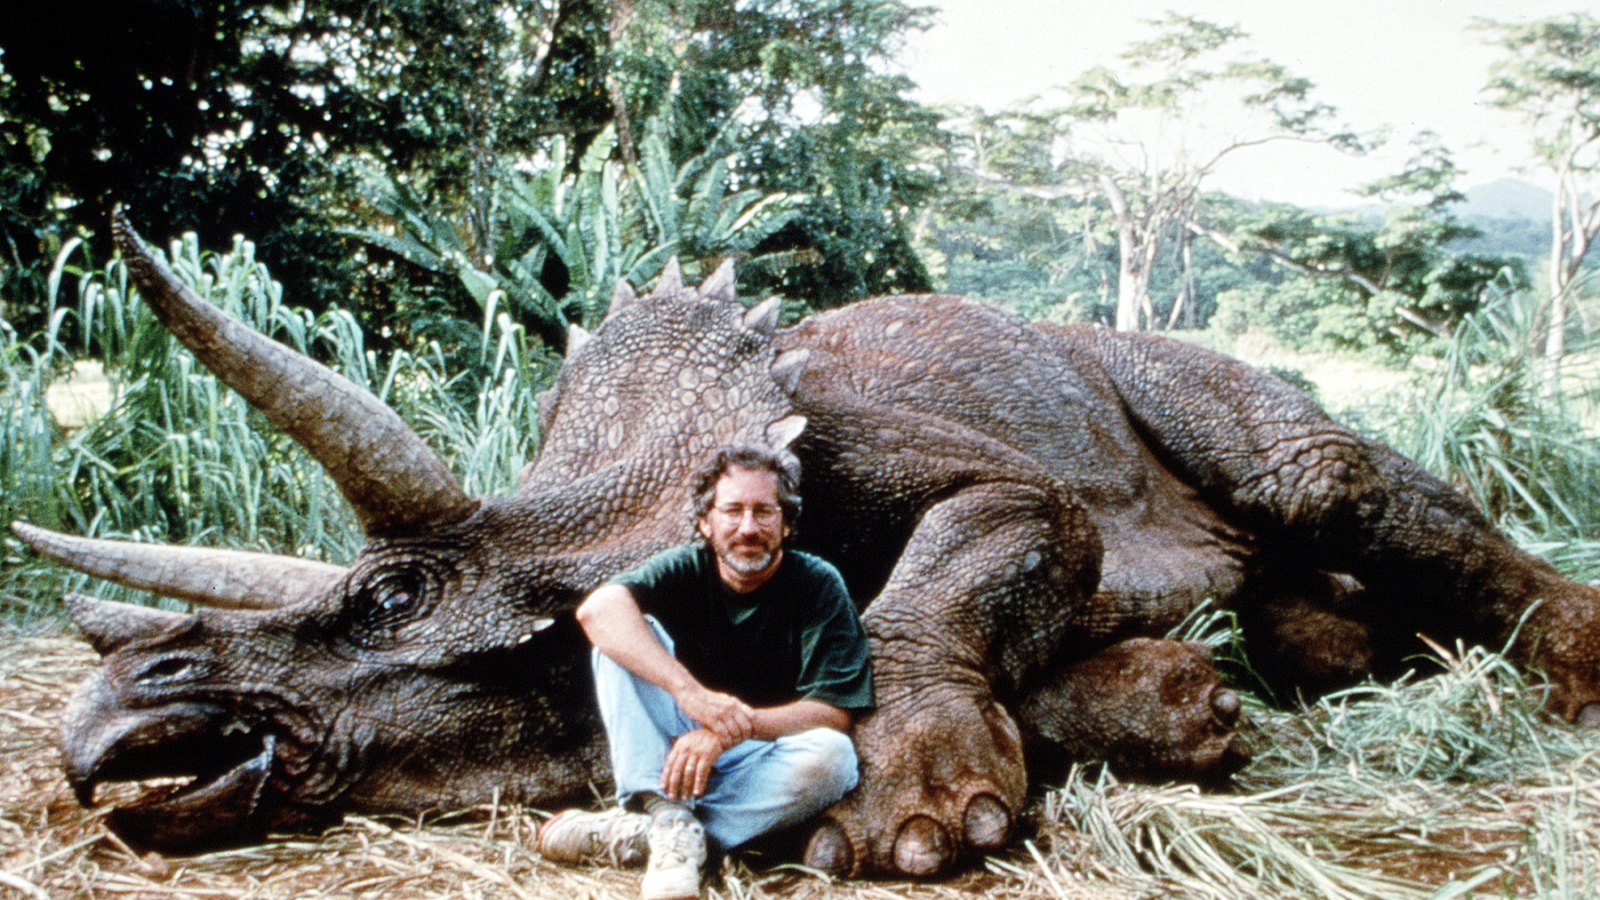 Steven Spielberg on the set of Jurassic Park in 1993